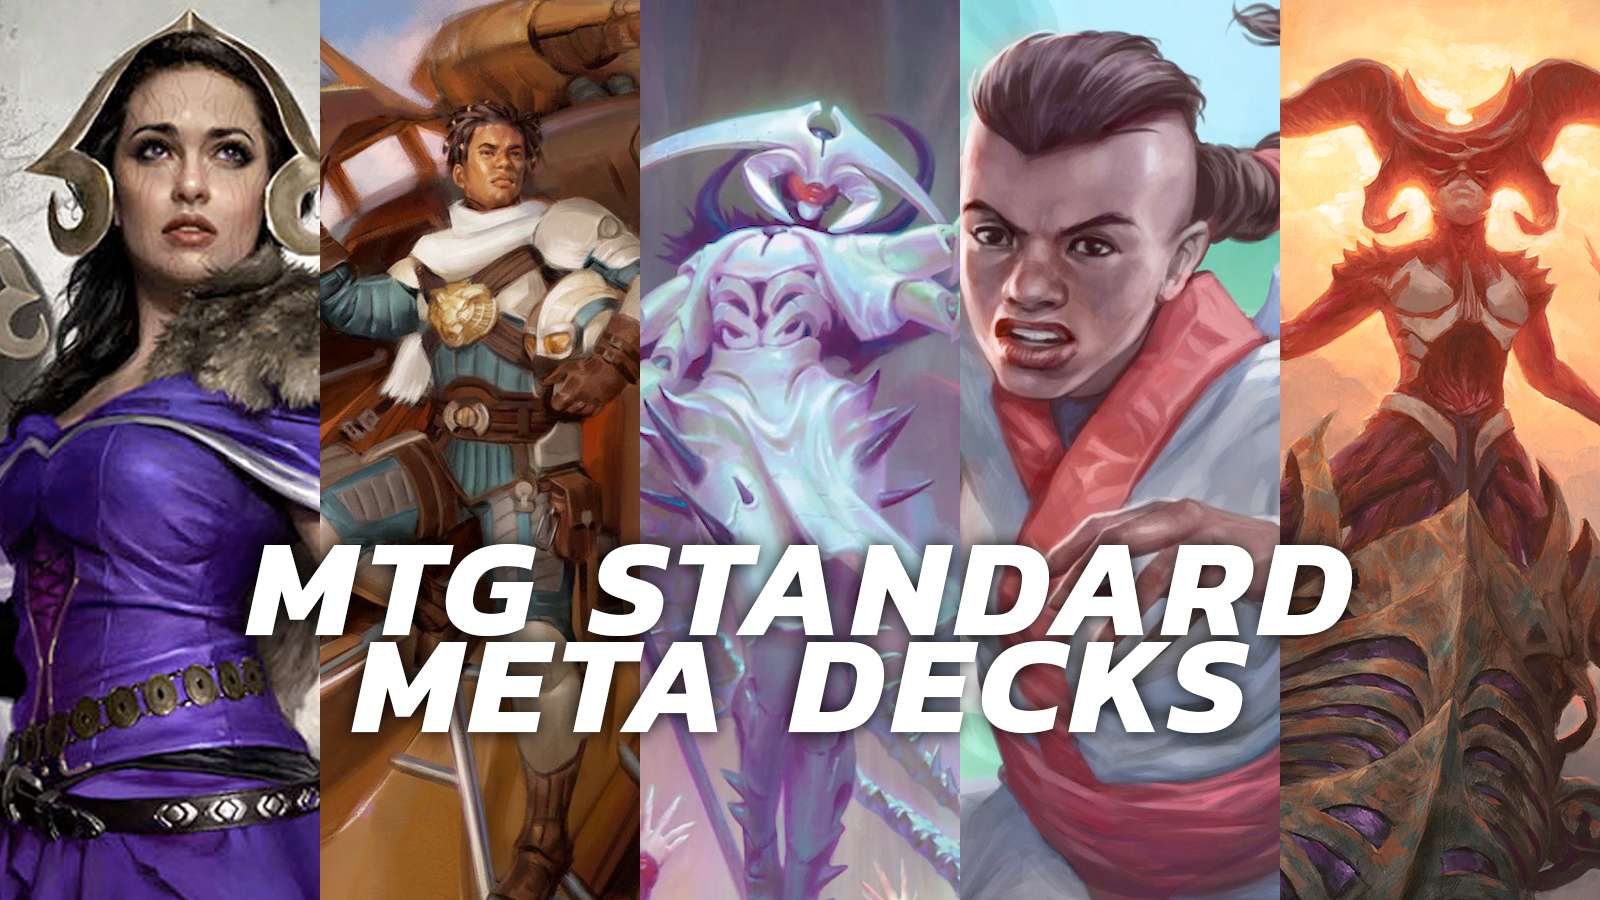 mtg standard meta decks with key art for each deck underneath